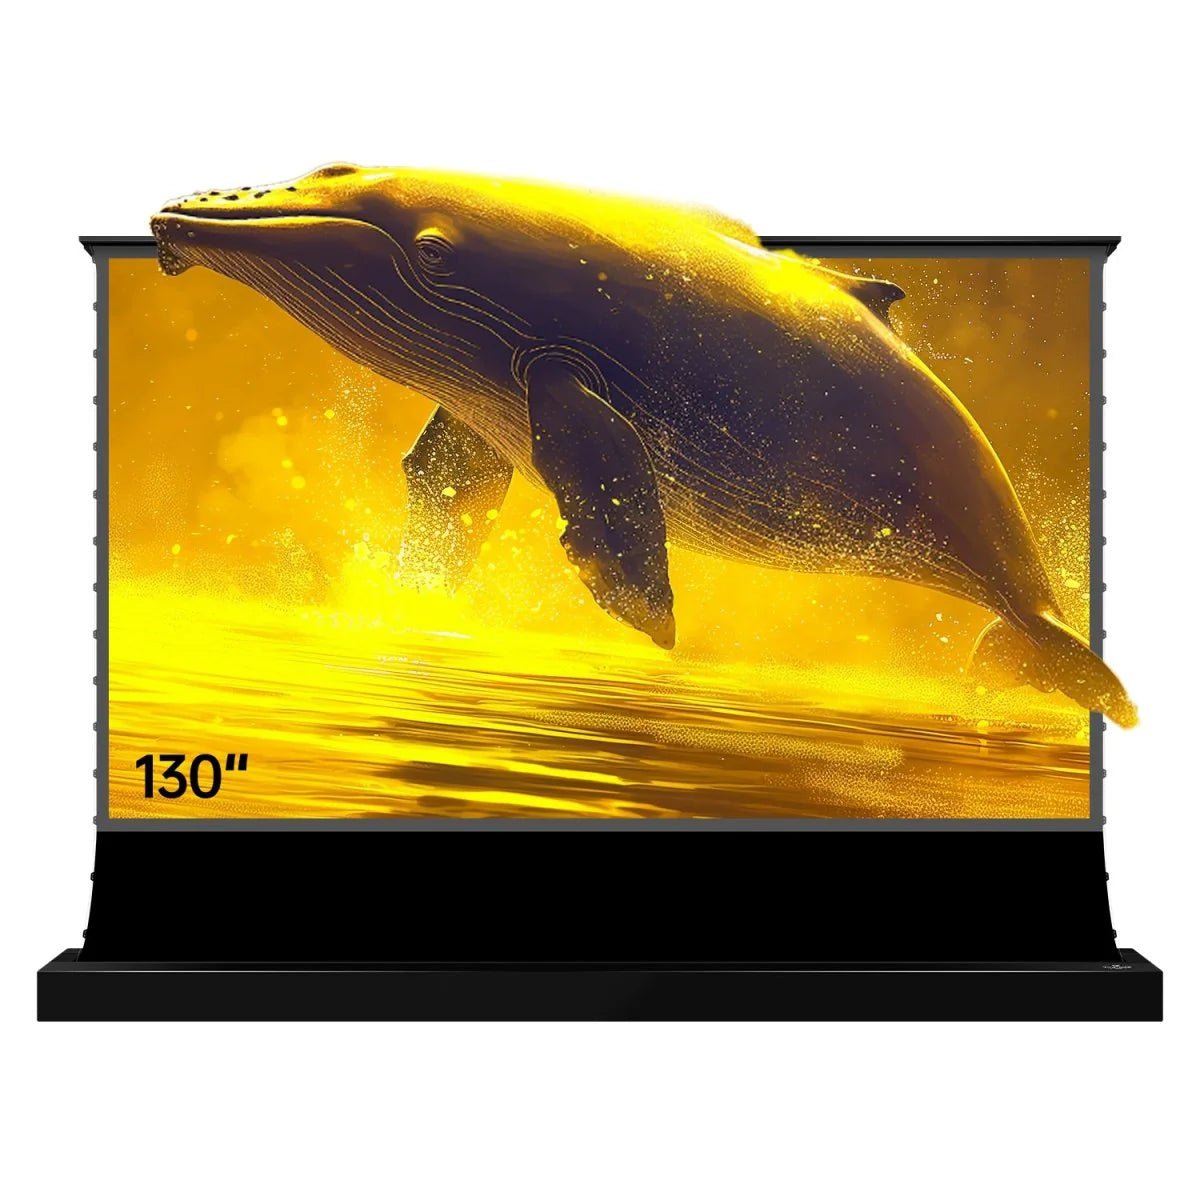 Ekran Vividstorm szary kolor UST S Pro 4K HD 3D antylekki zmotoryzowany laserowy projektor podłogowy alr screen